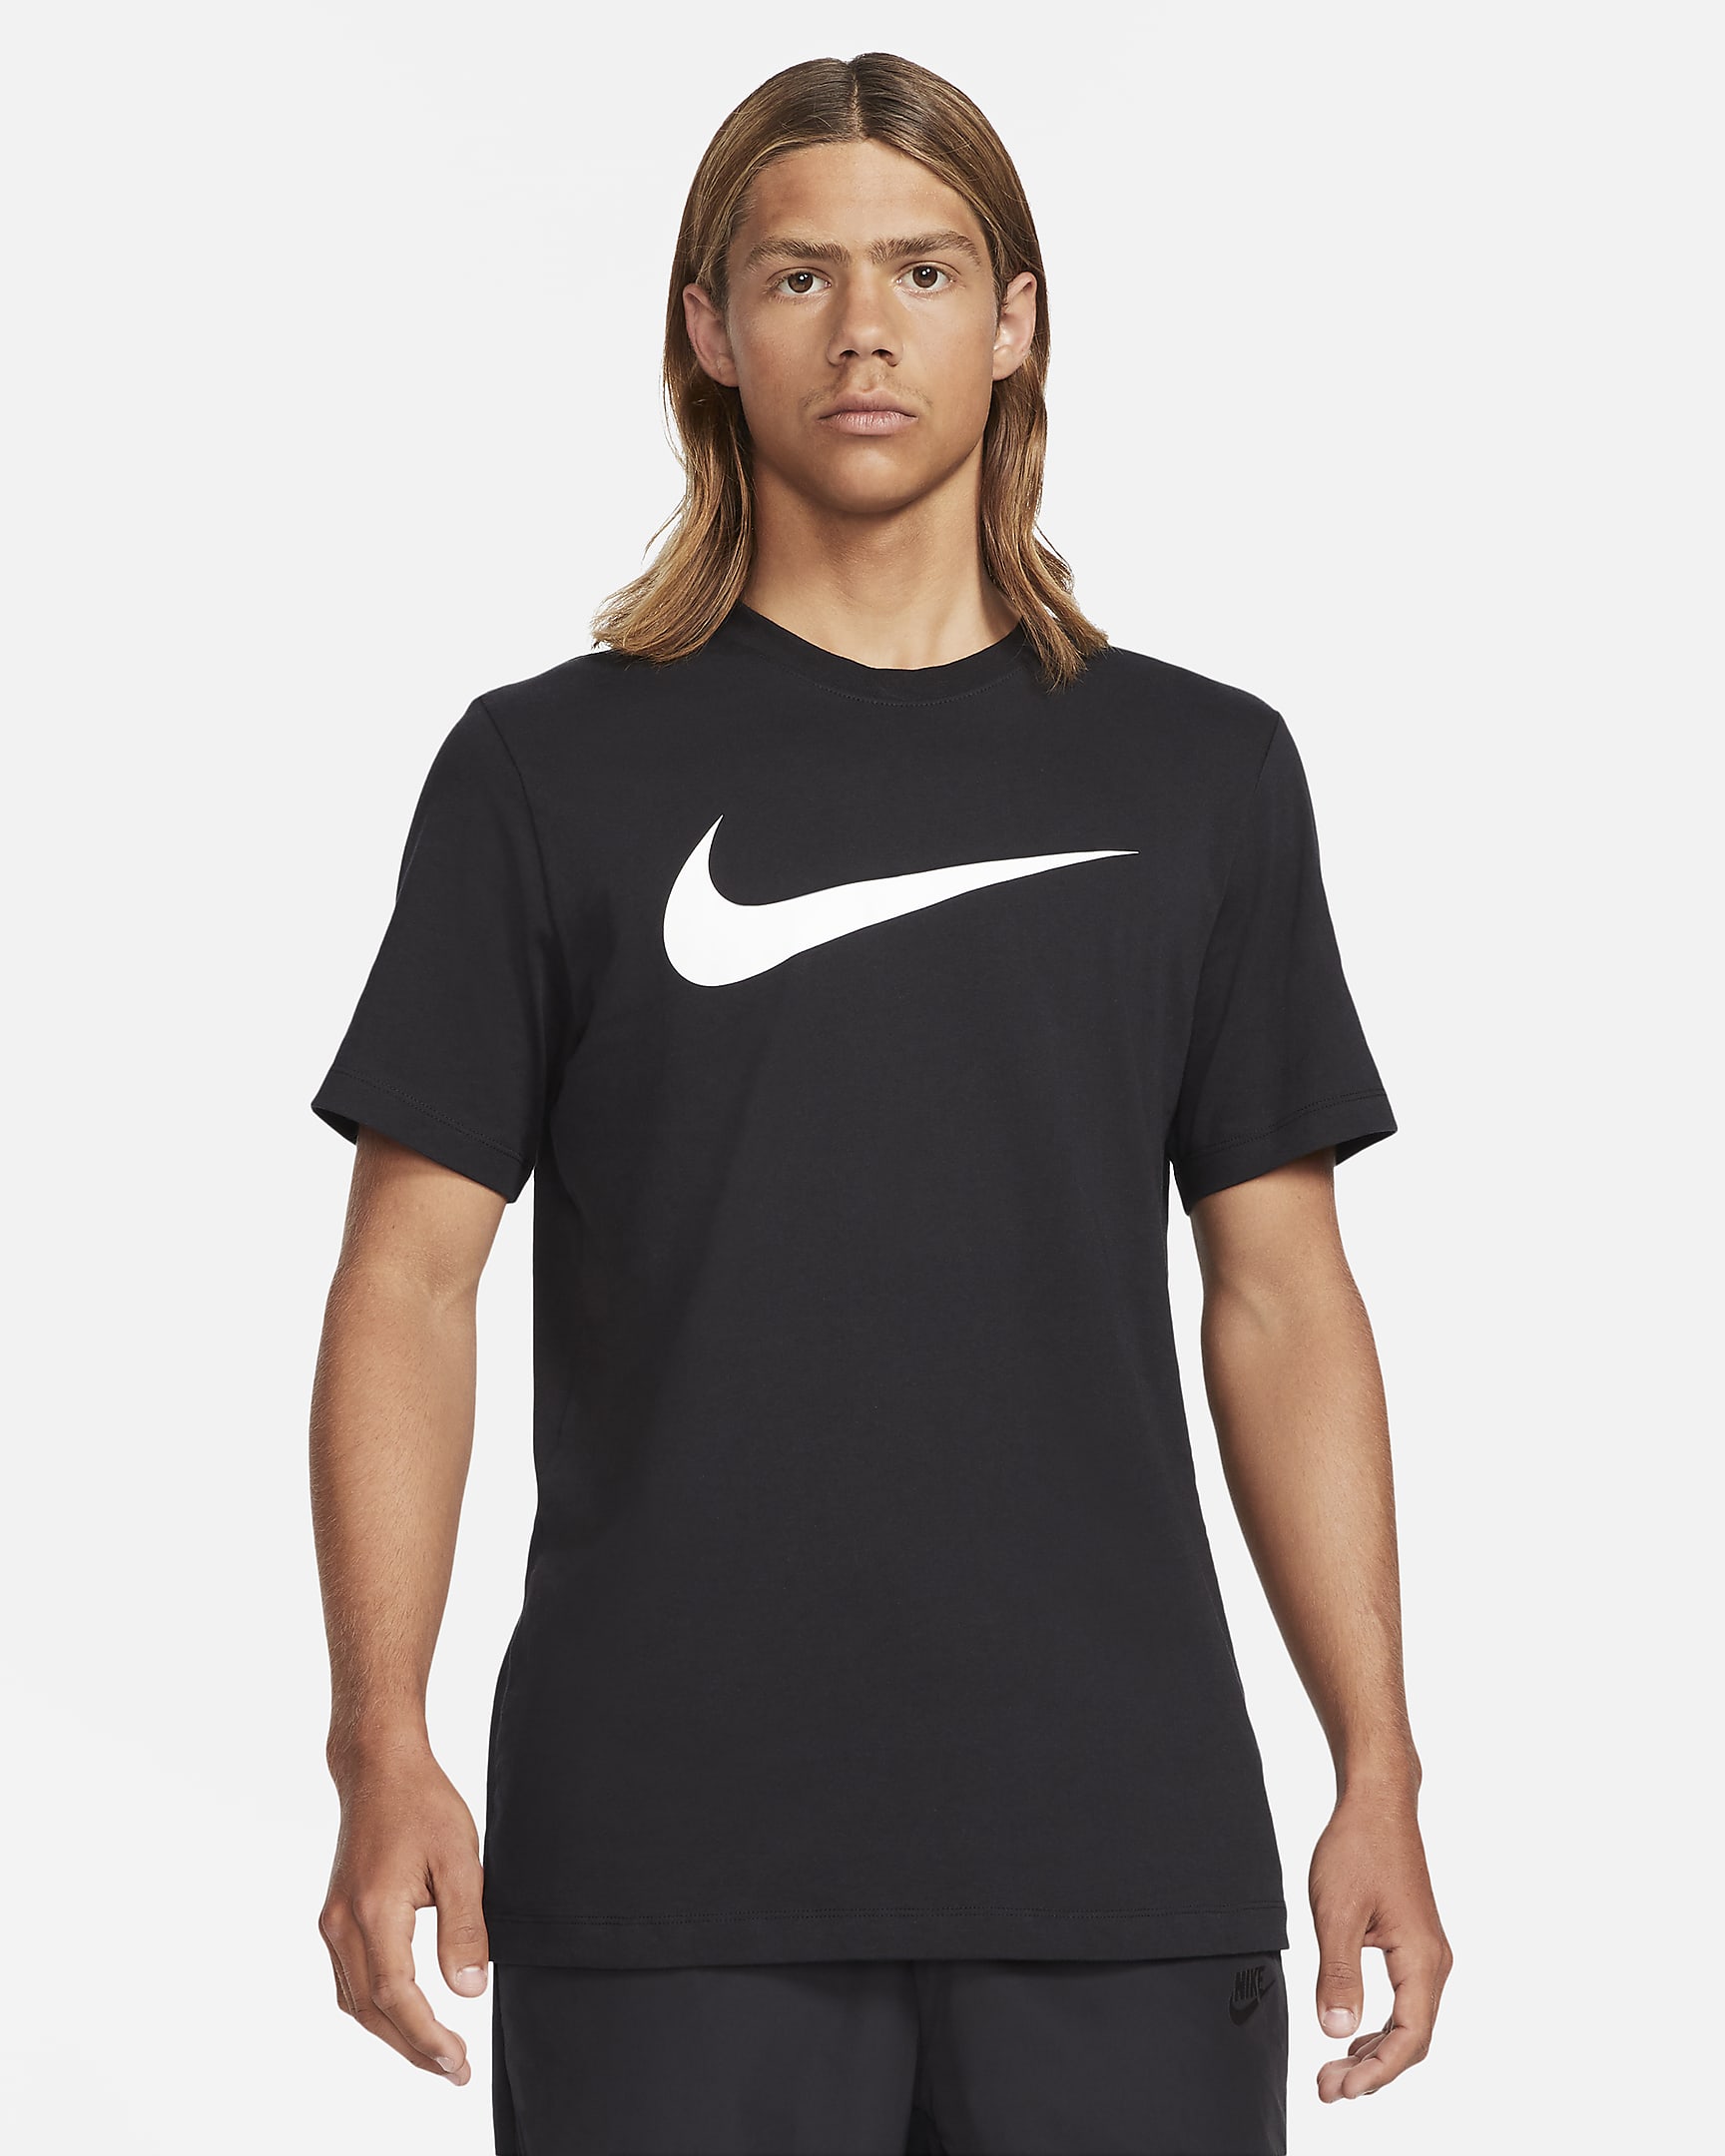 Nike Sportswear Swoosh Men's T-Shirt - Black/White